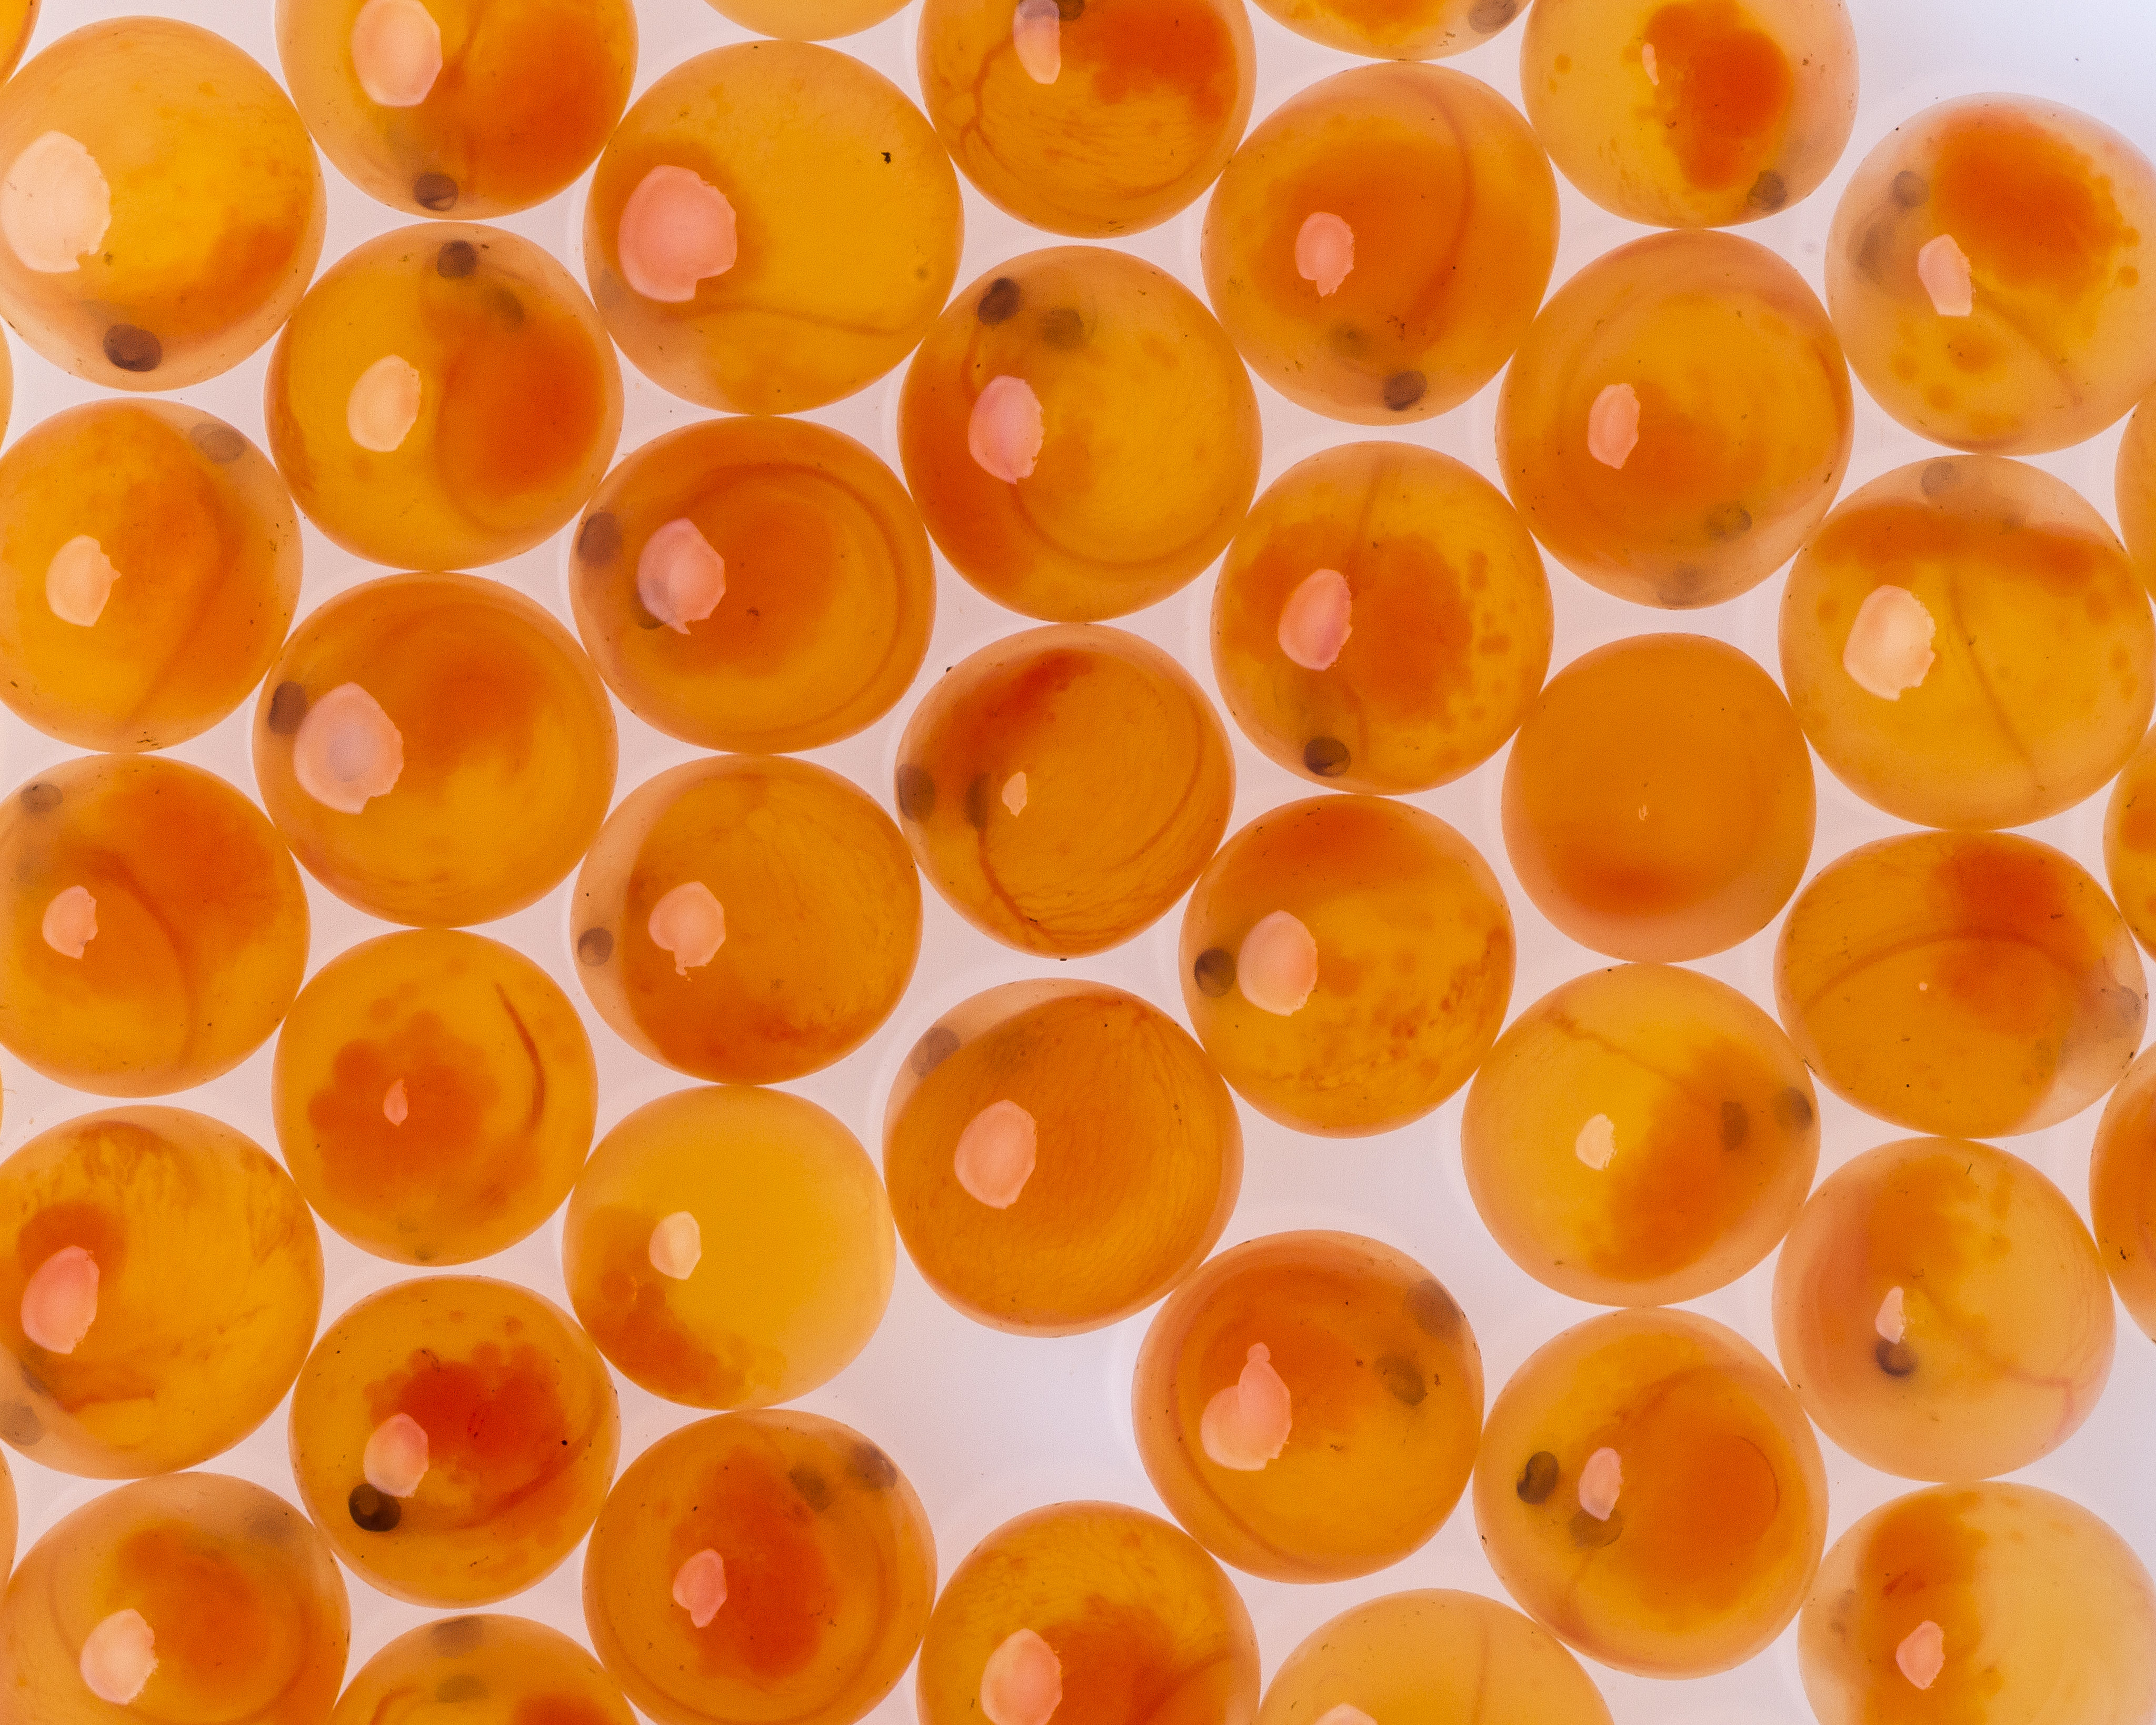 Orange fish eggs on a white background.